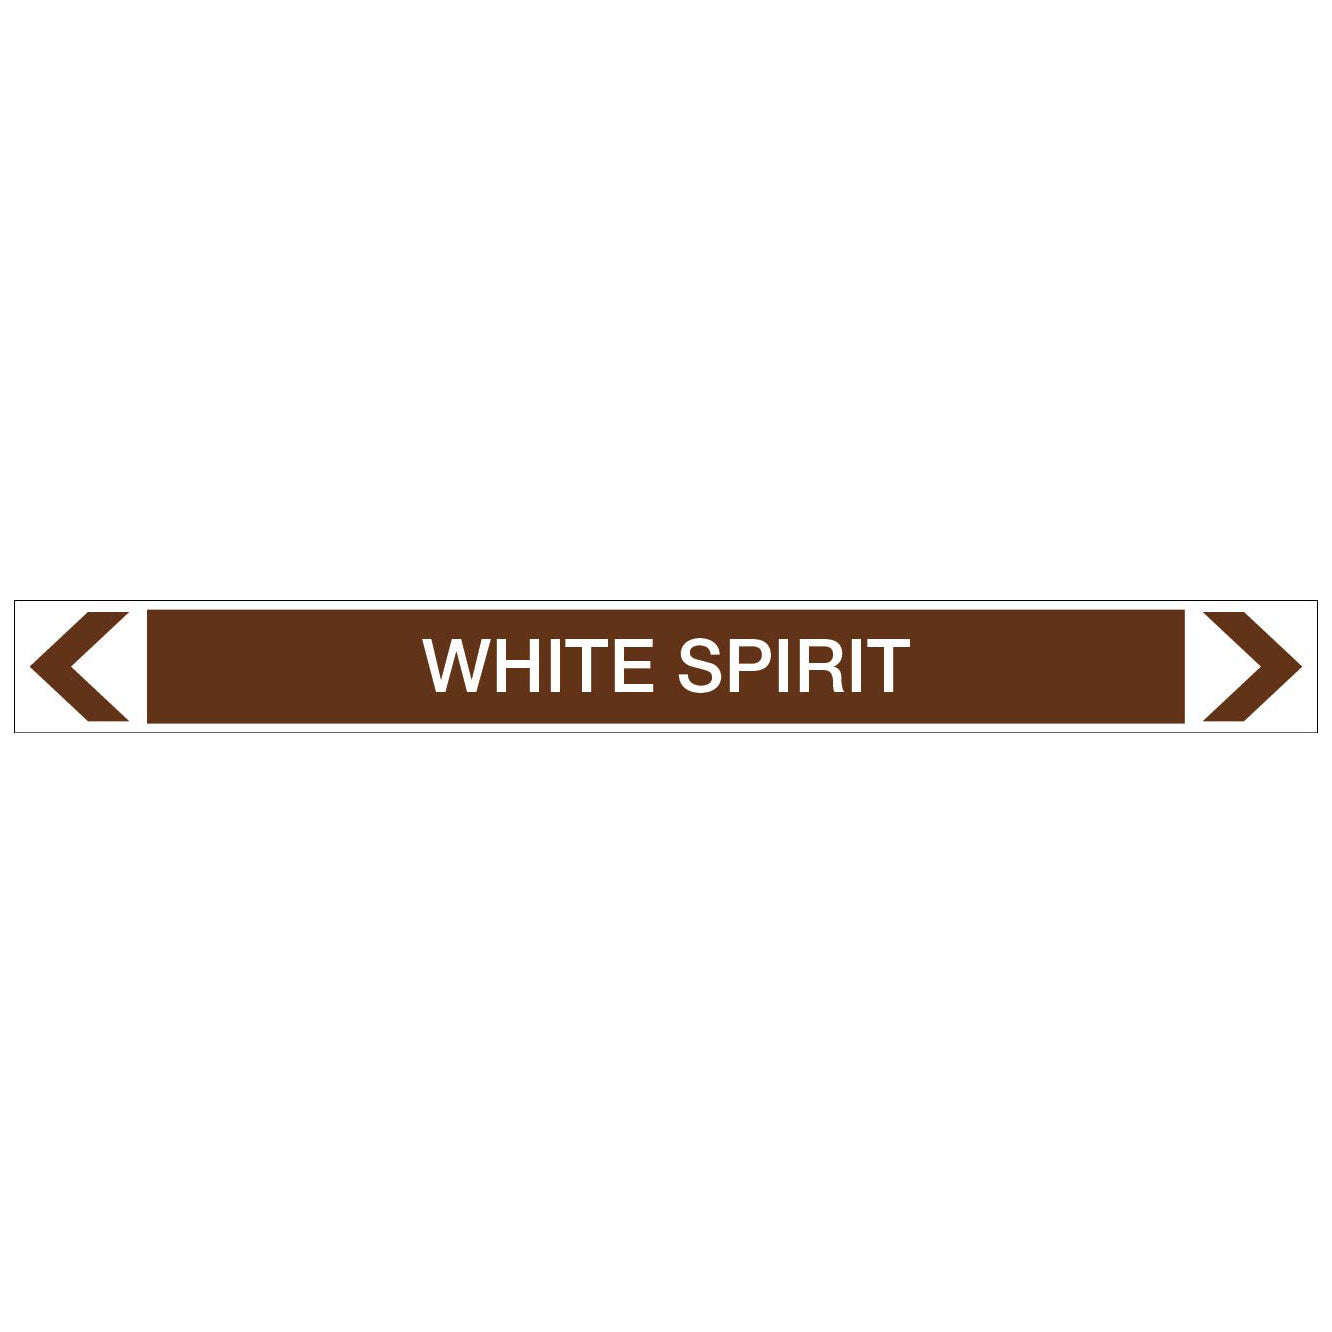 Oils - White Spirit - Pipe Marker Sticker